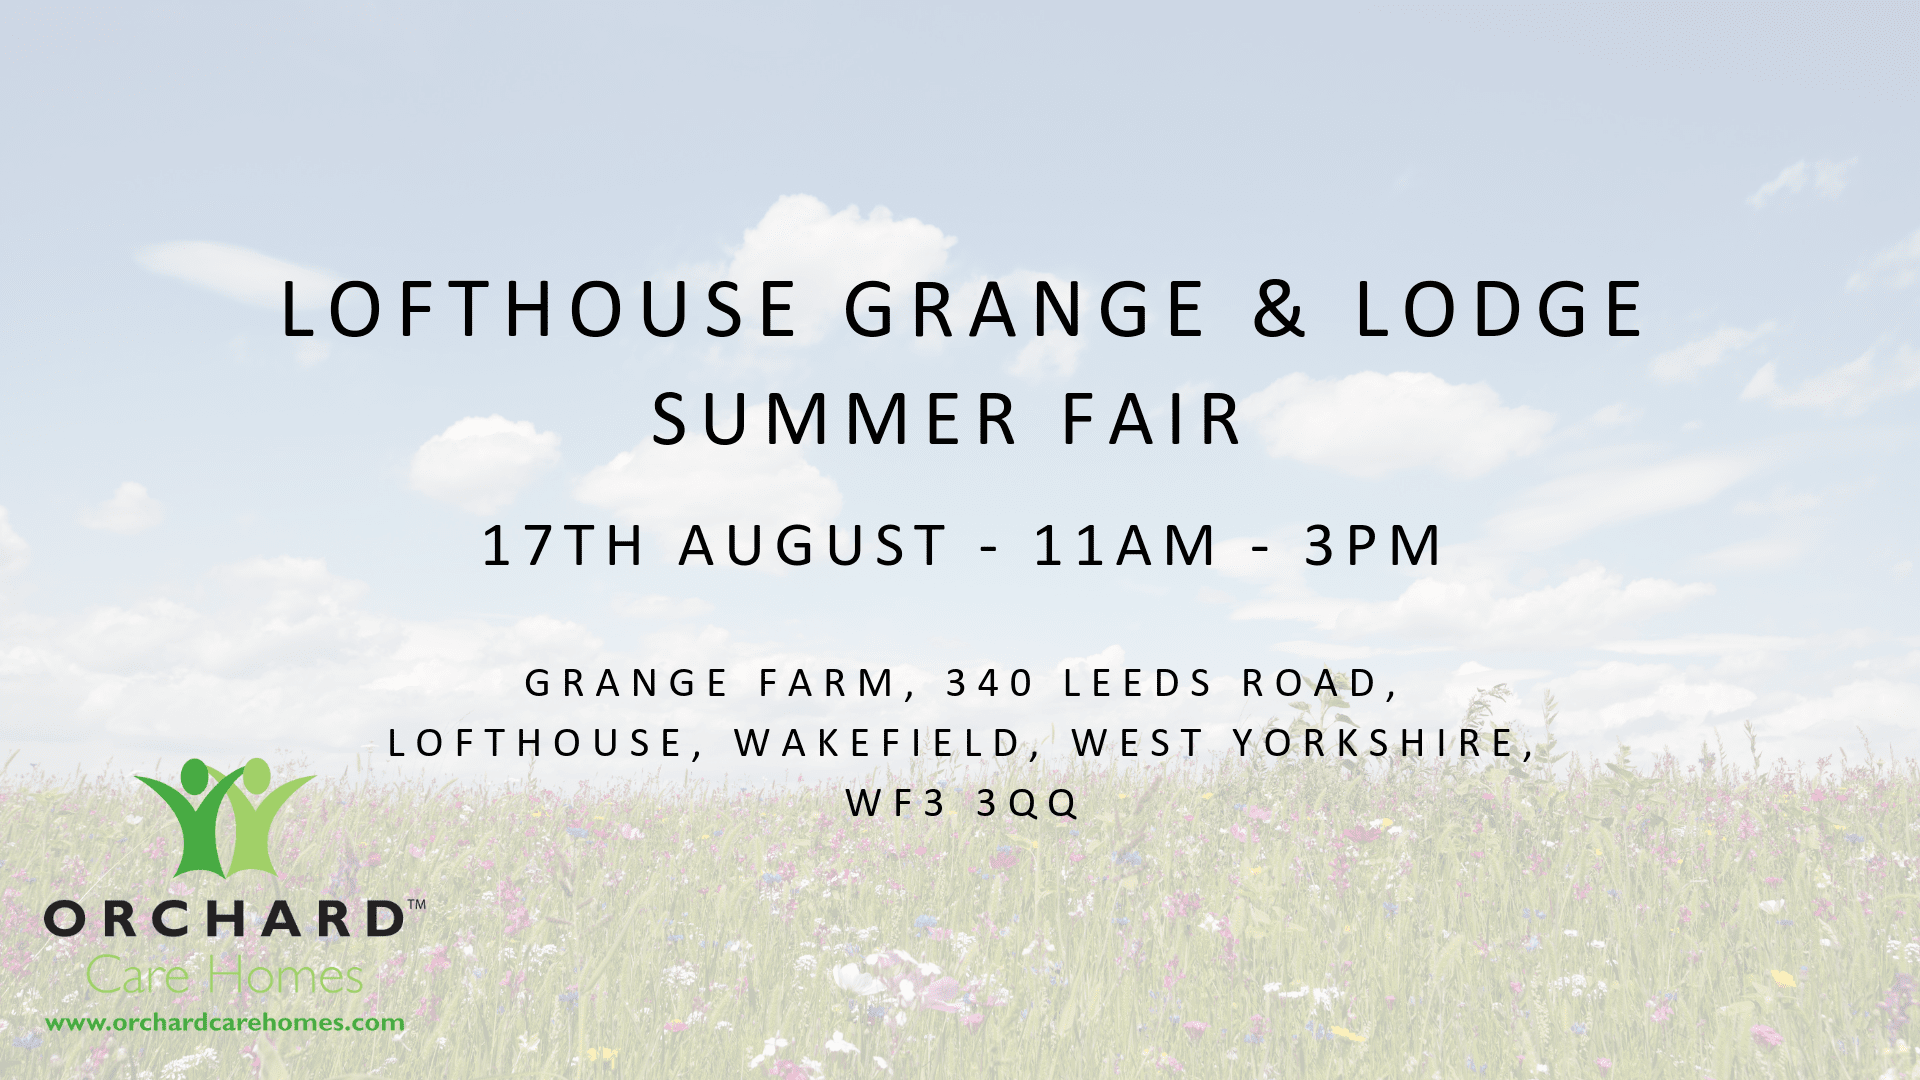 Lofthouse Grange & Lodge Summer Fair